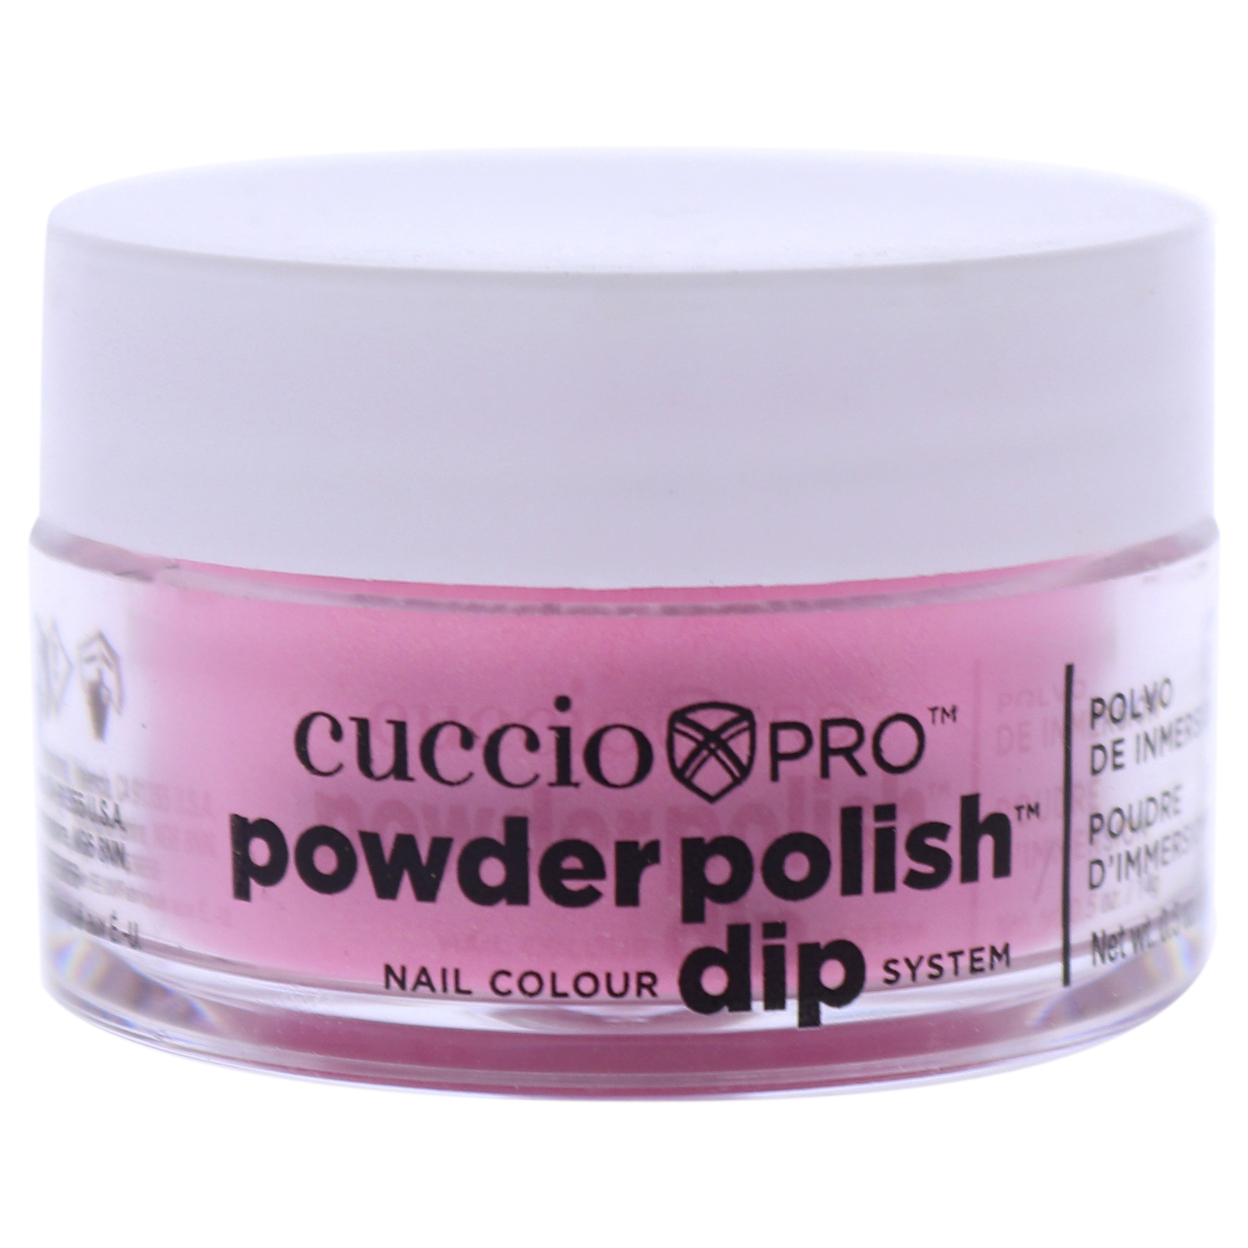 Cuccio Colour Pro Powder Polish Nail Colour Dip System - Bright Pink With Gold Mica Nail Powder 0.5 Oz